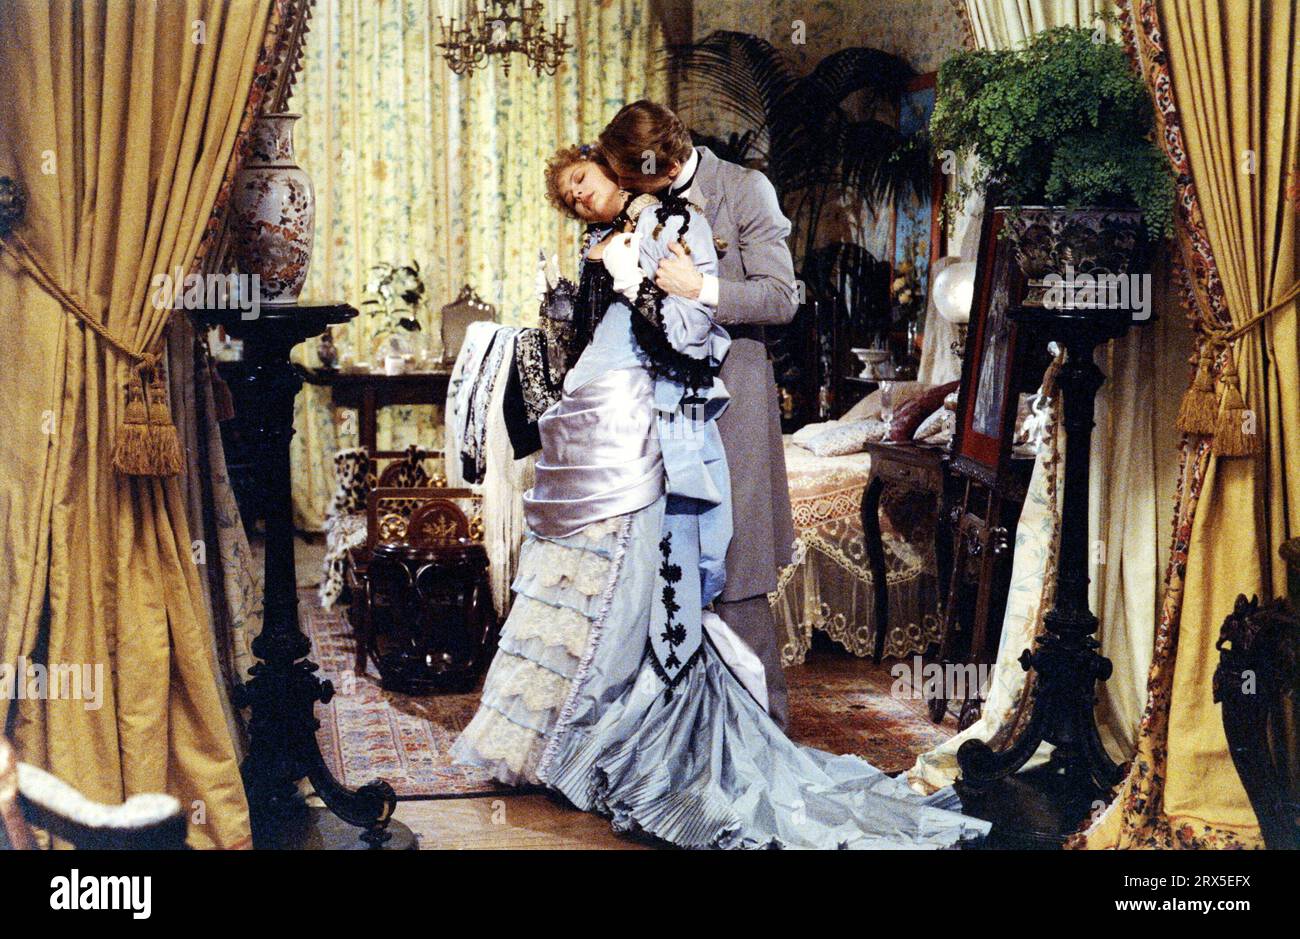 ORNELLA MUTI and JEREMY IRONS in SWANN IN LOVE (1984) -Original title: UN AMOUR DE SWANN-, directed by VOLKER SCHLONDORFF. Stock Photo